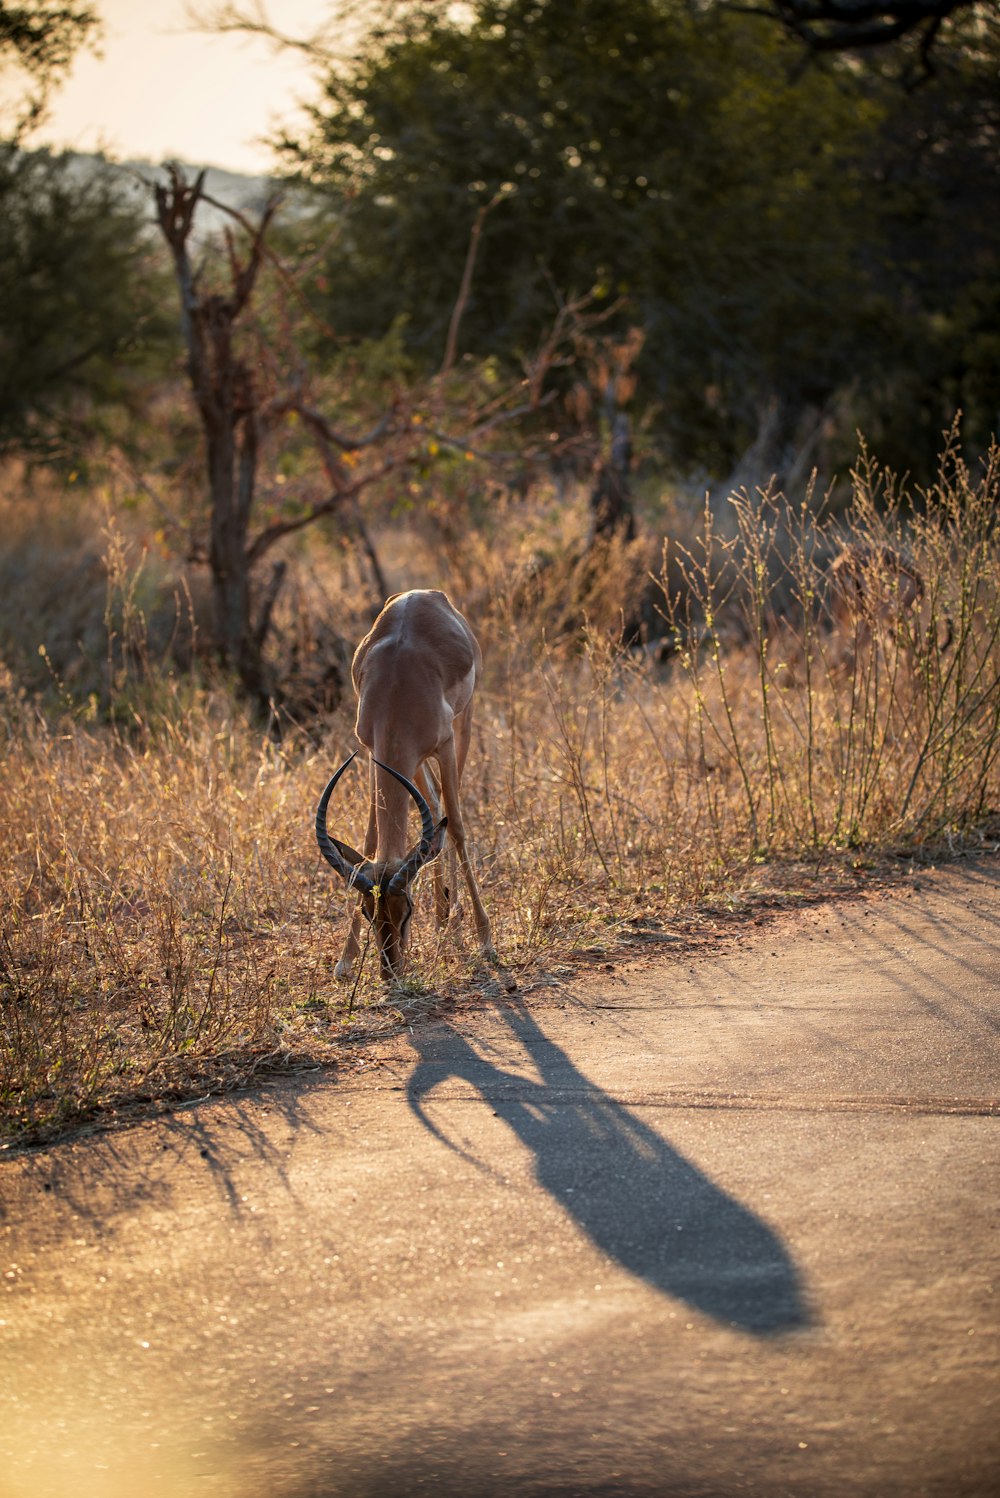 a kangaroo walking on a dirt road